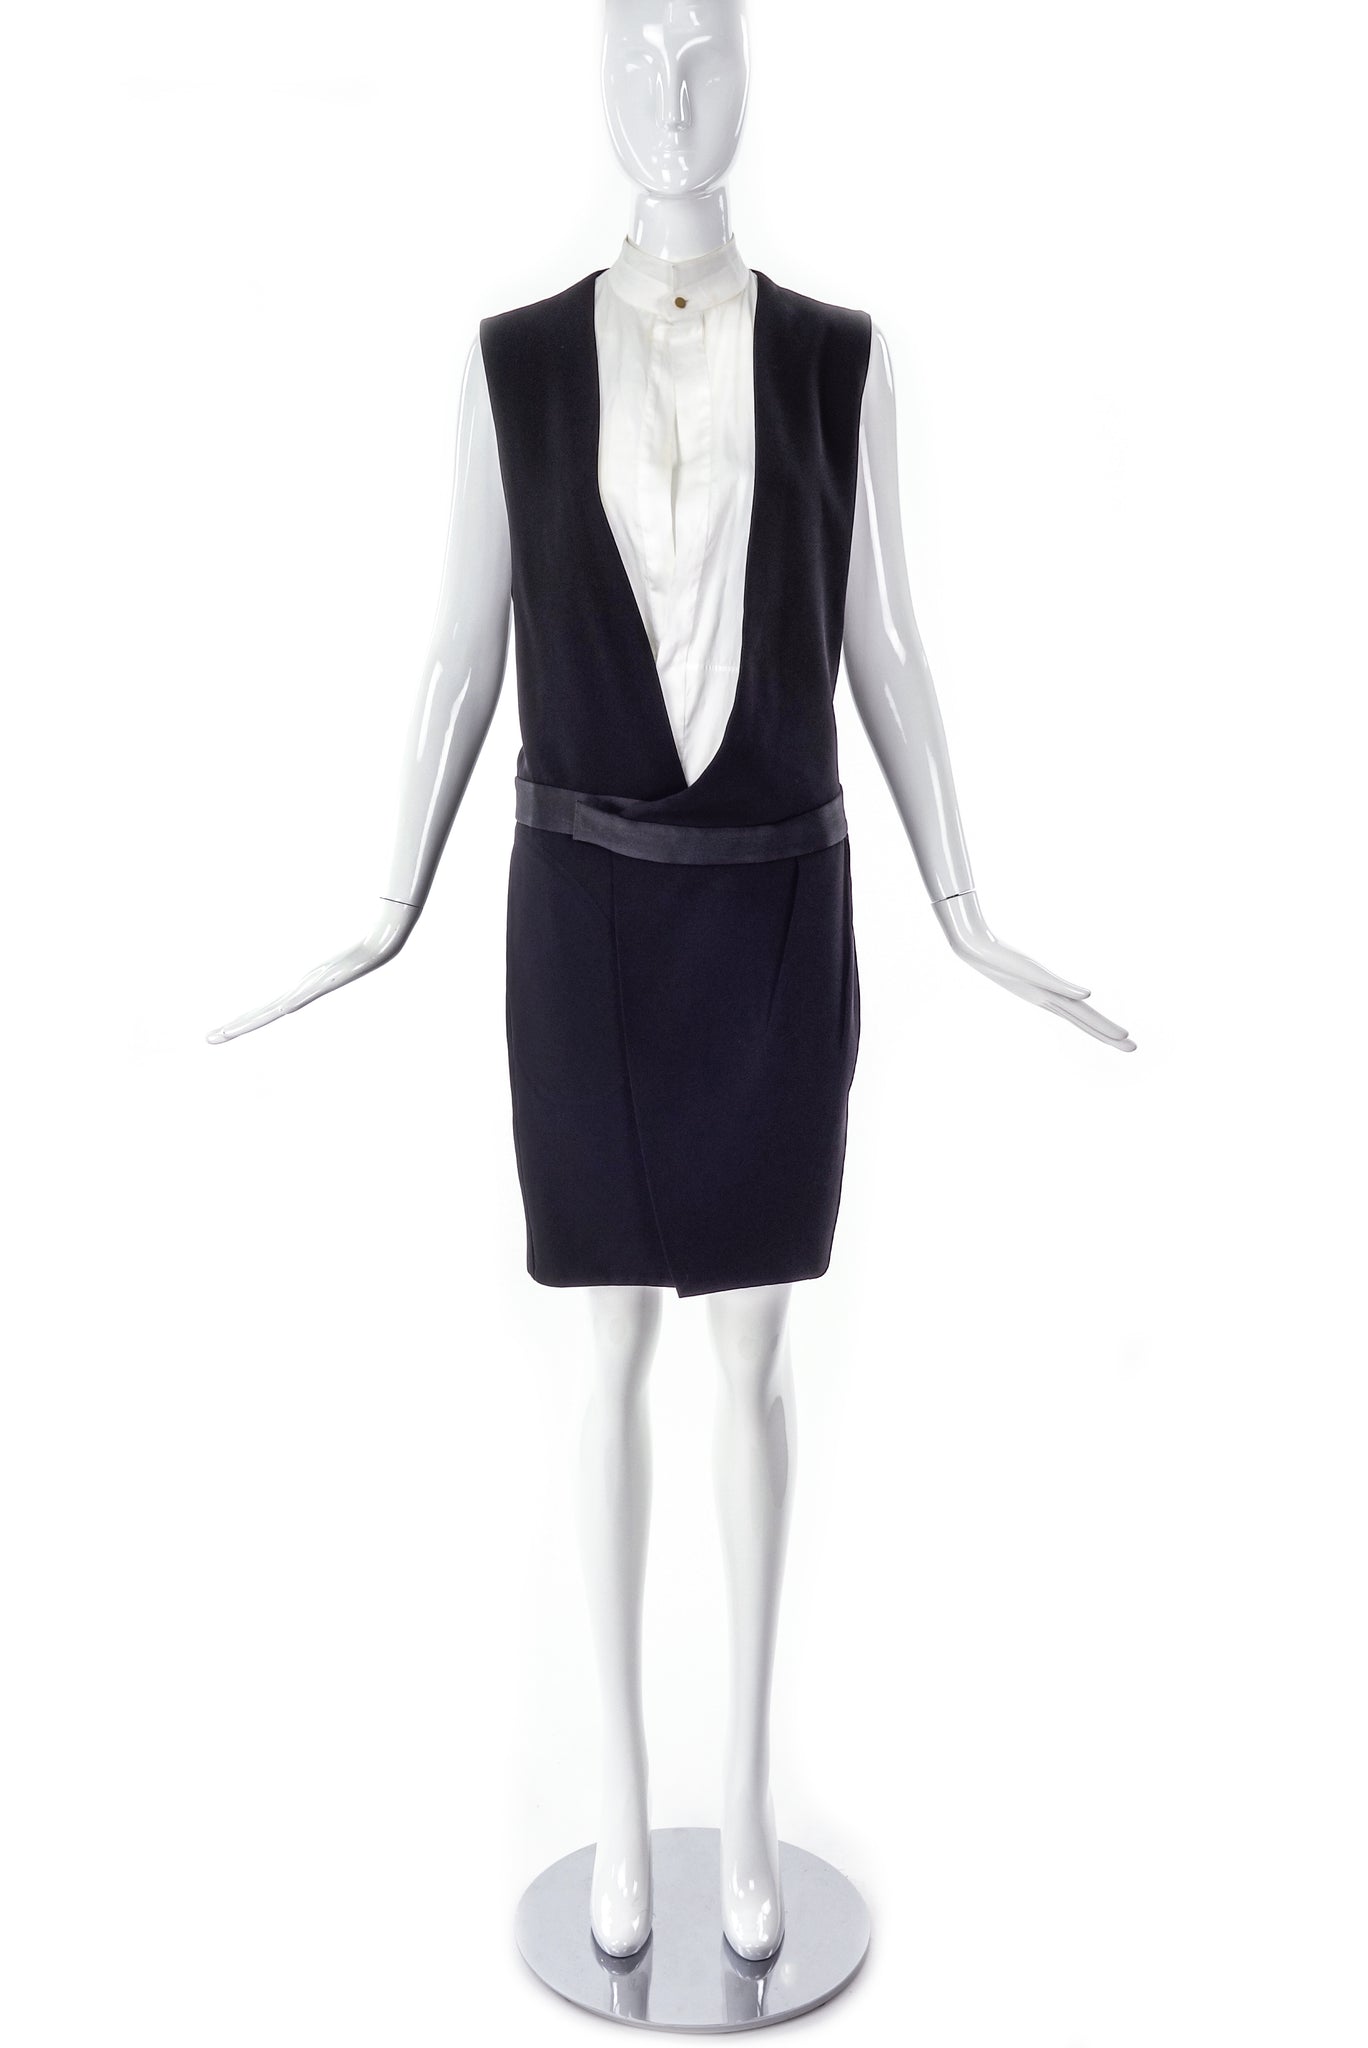 Céline by Phoebe Philo Black and White Tuxedo Dress - BOUTIQUE